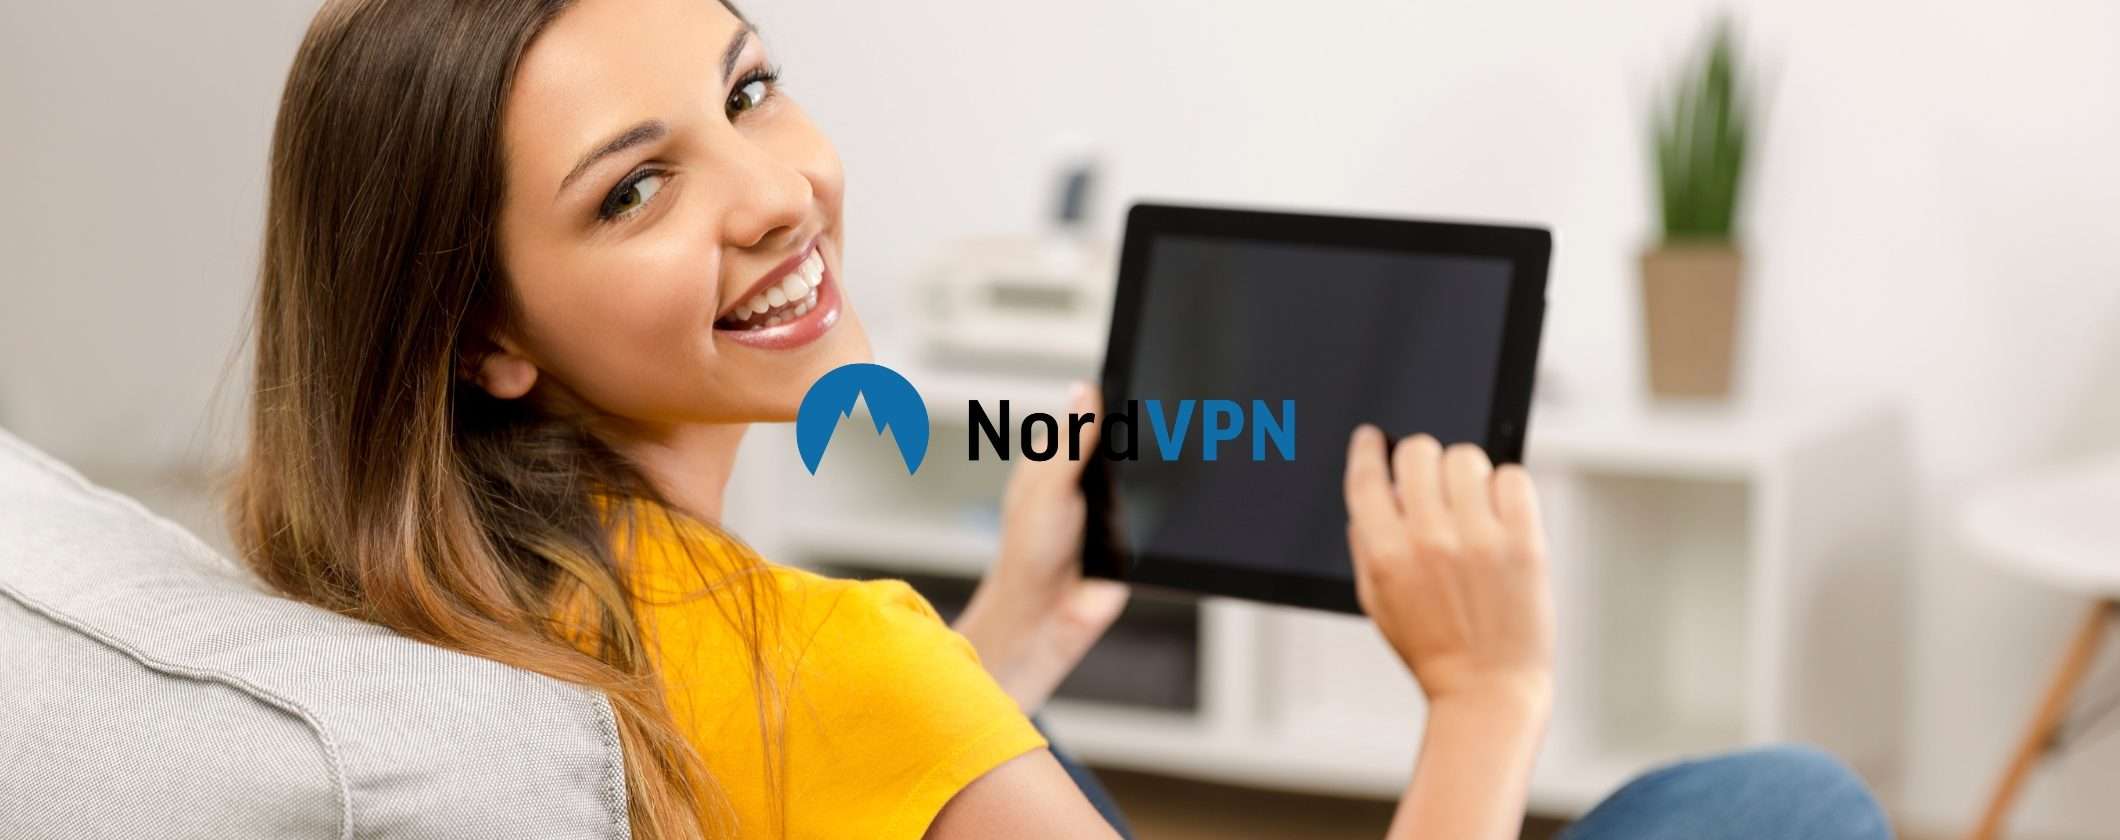 Senza VPN non sei protetto: attiva ora NordVPN con 3 mesi gratis